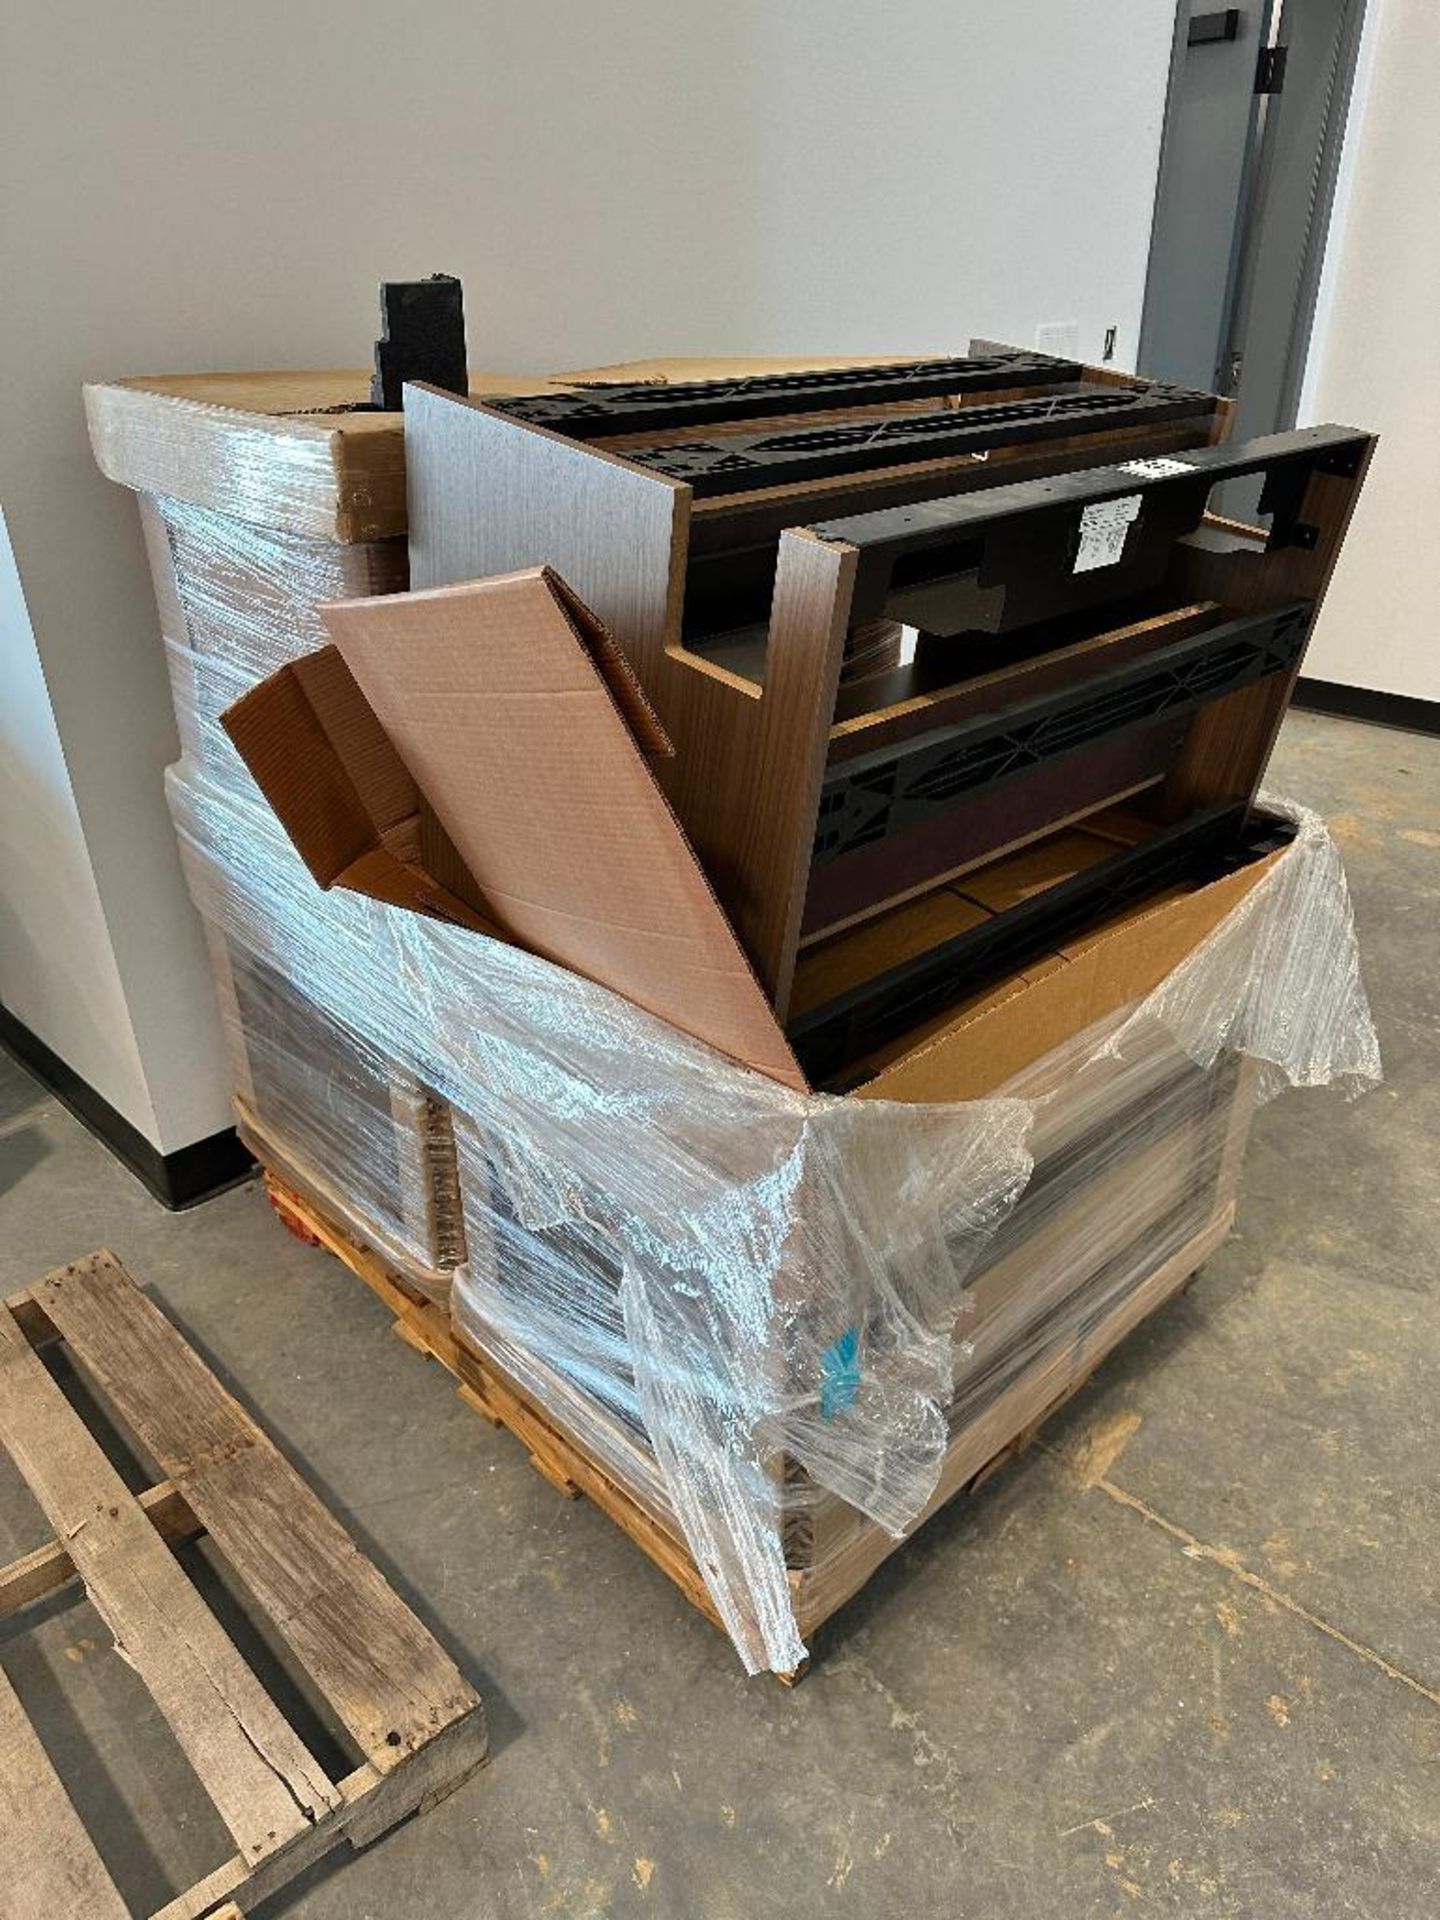 Pallet of Asst. Steelcase Desk Parts